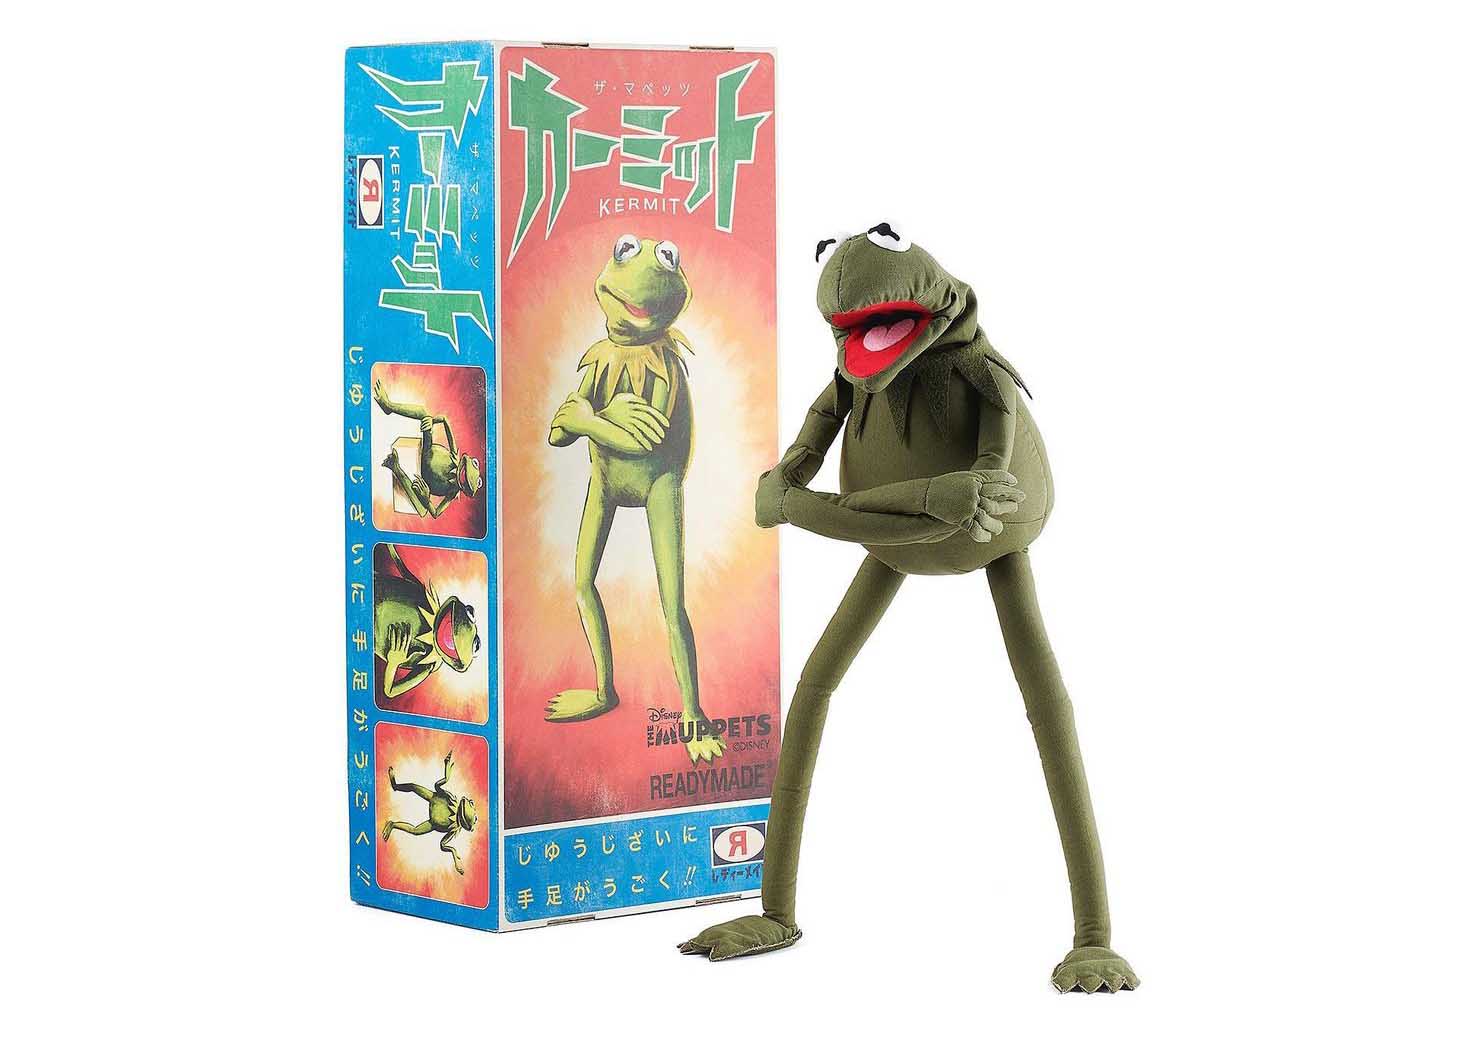 MedicomSupreme x Medicom Toy Kermit the Frog